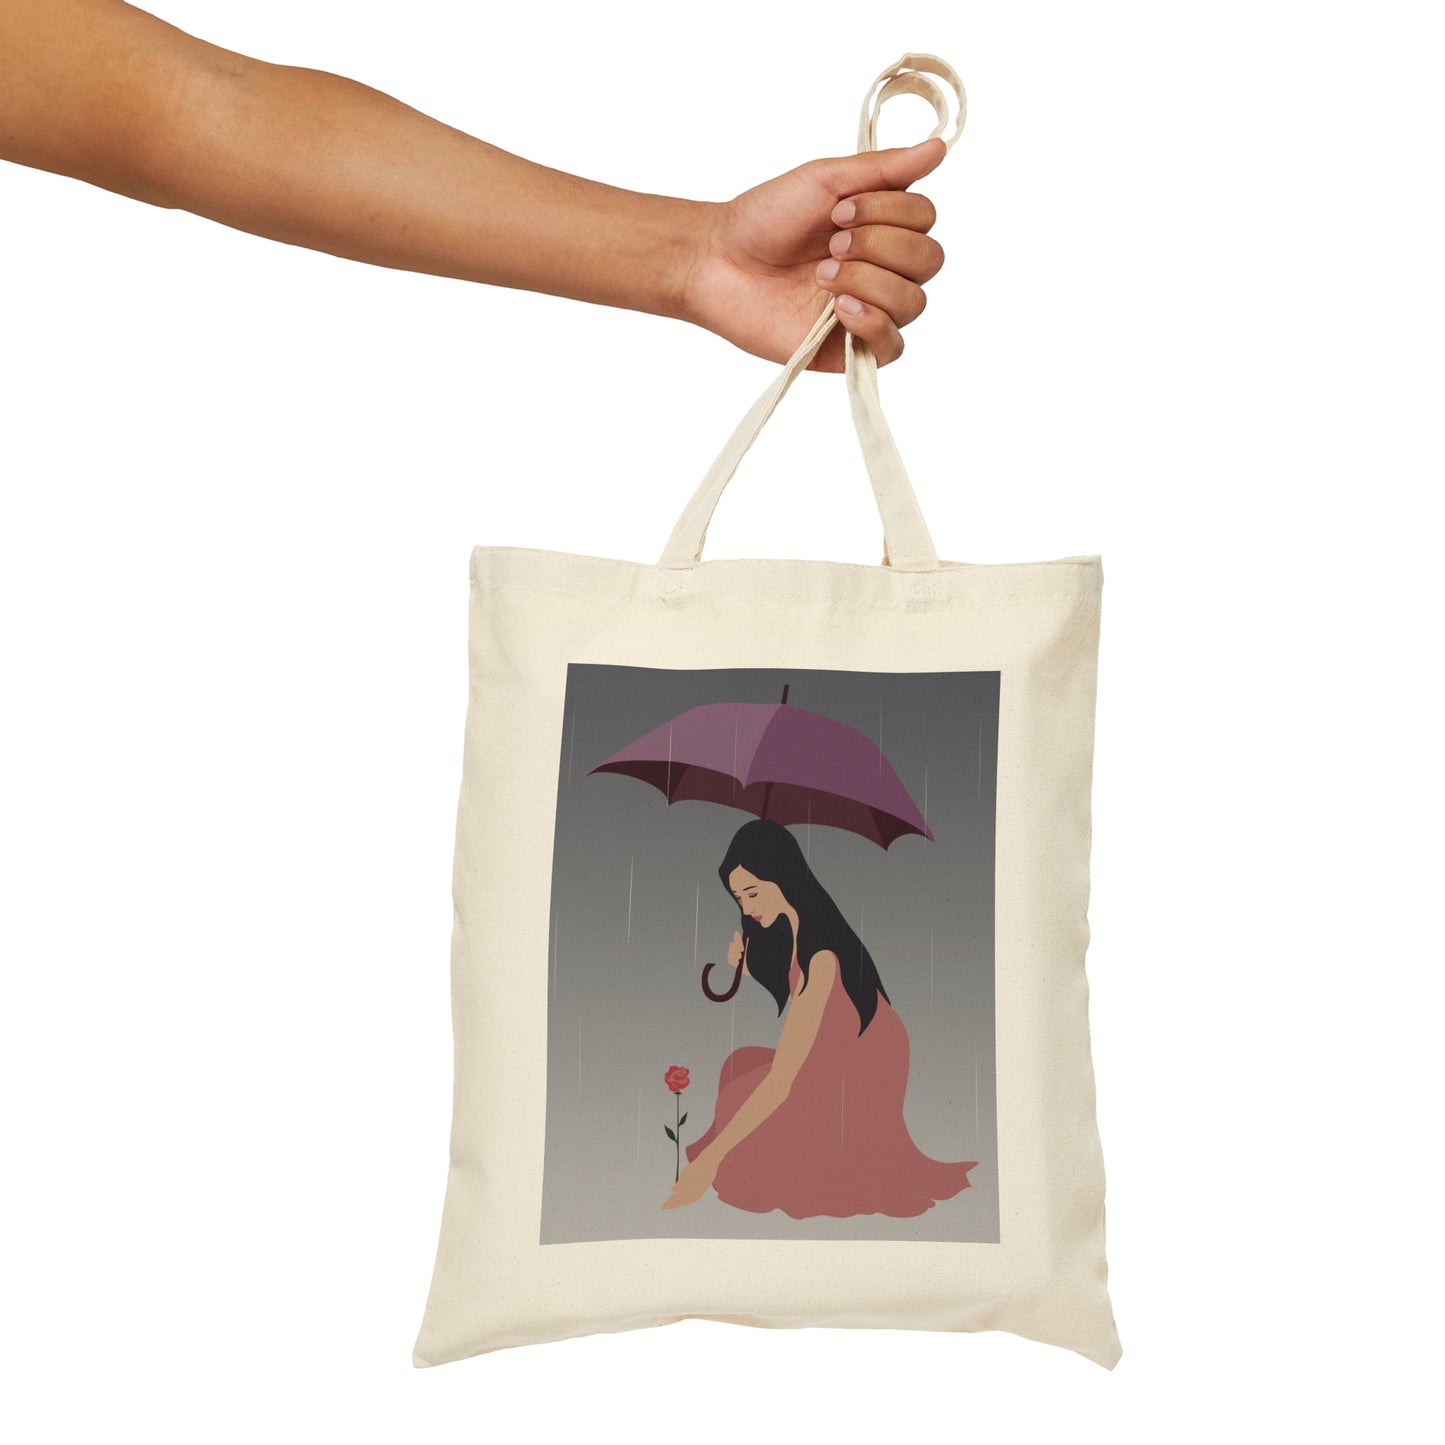 Woman with Umbrella Cartoon Art Walking in the Rain Canvas Shopping Cotton Tote Bag